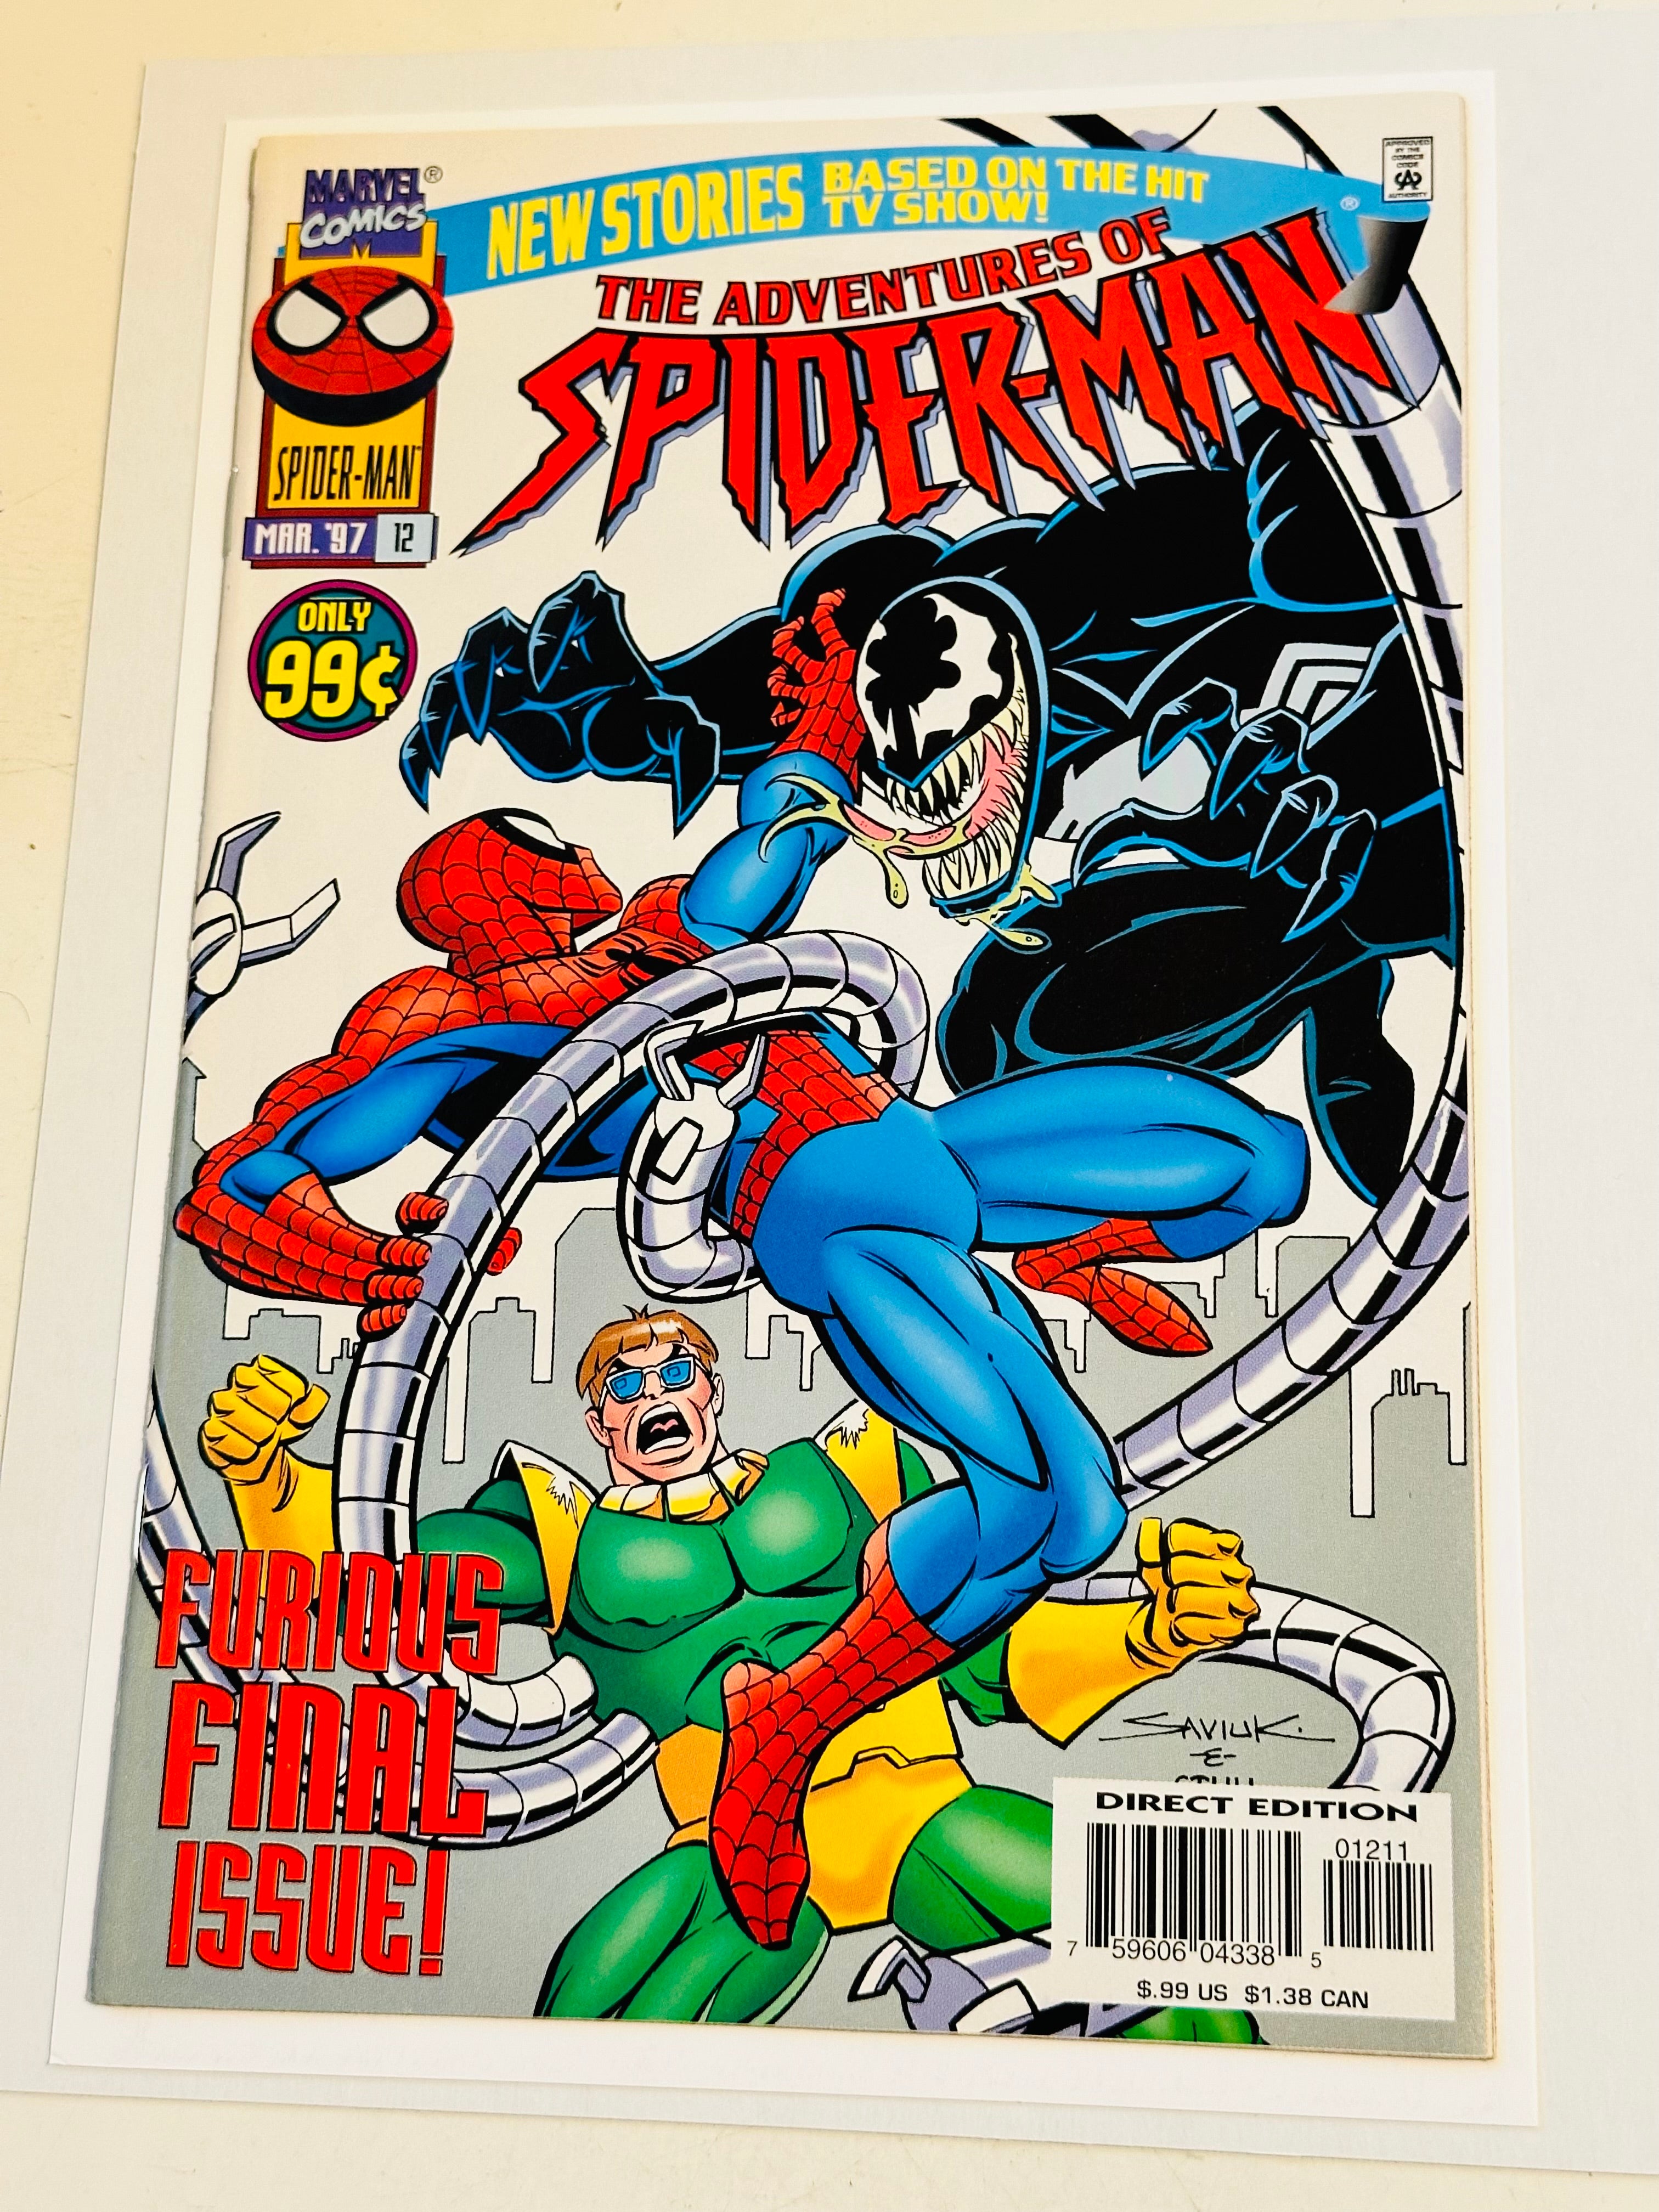 The adventures of Spider-man #12 Venom app. 1997